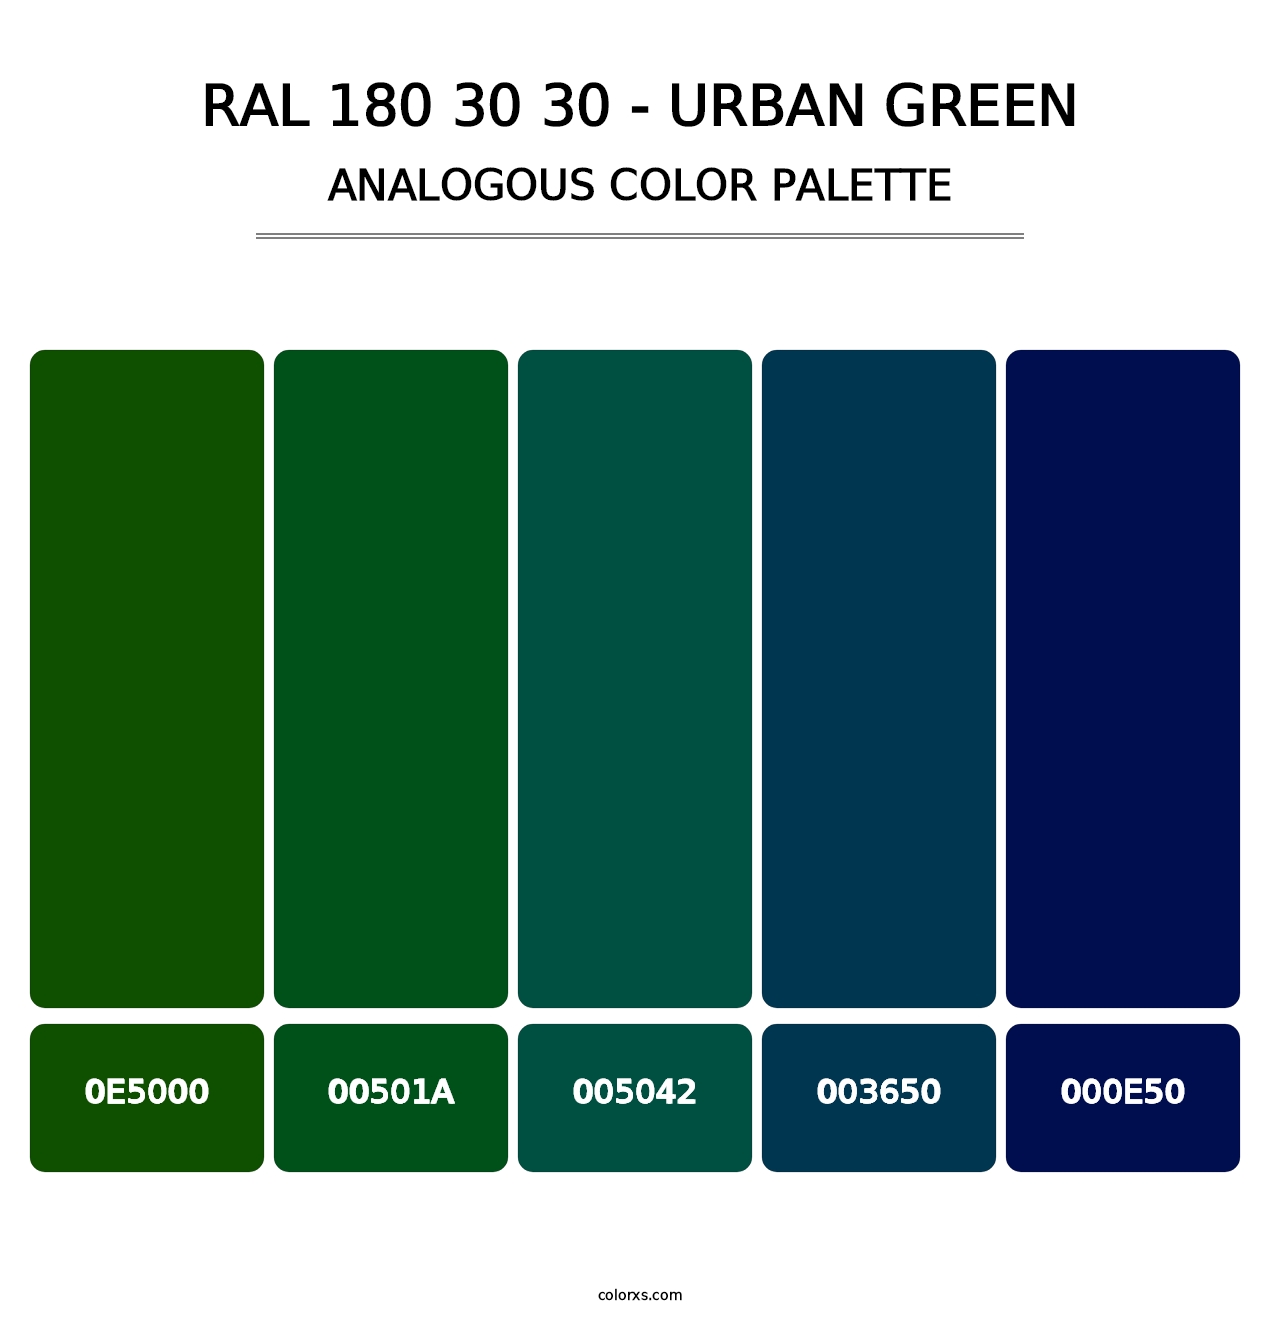 RAL 180 30 30 - Urban Green - Analogous Color Palette